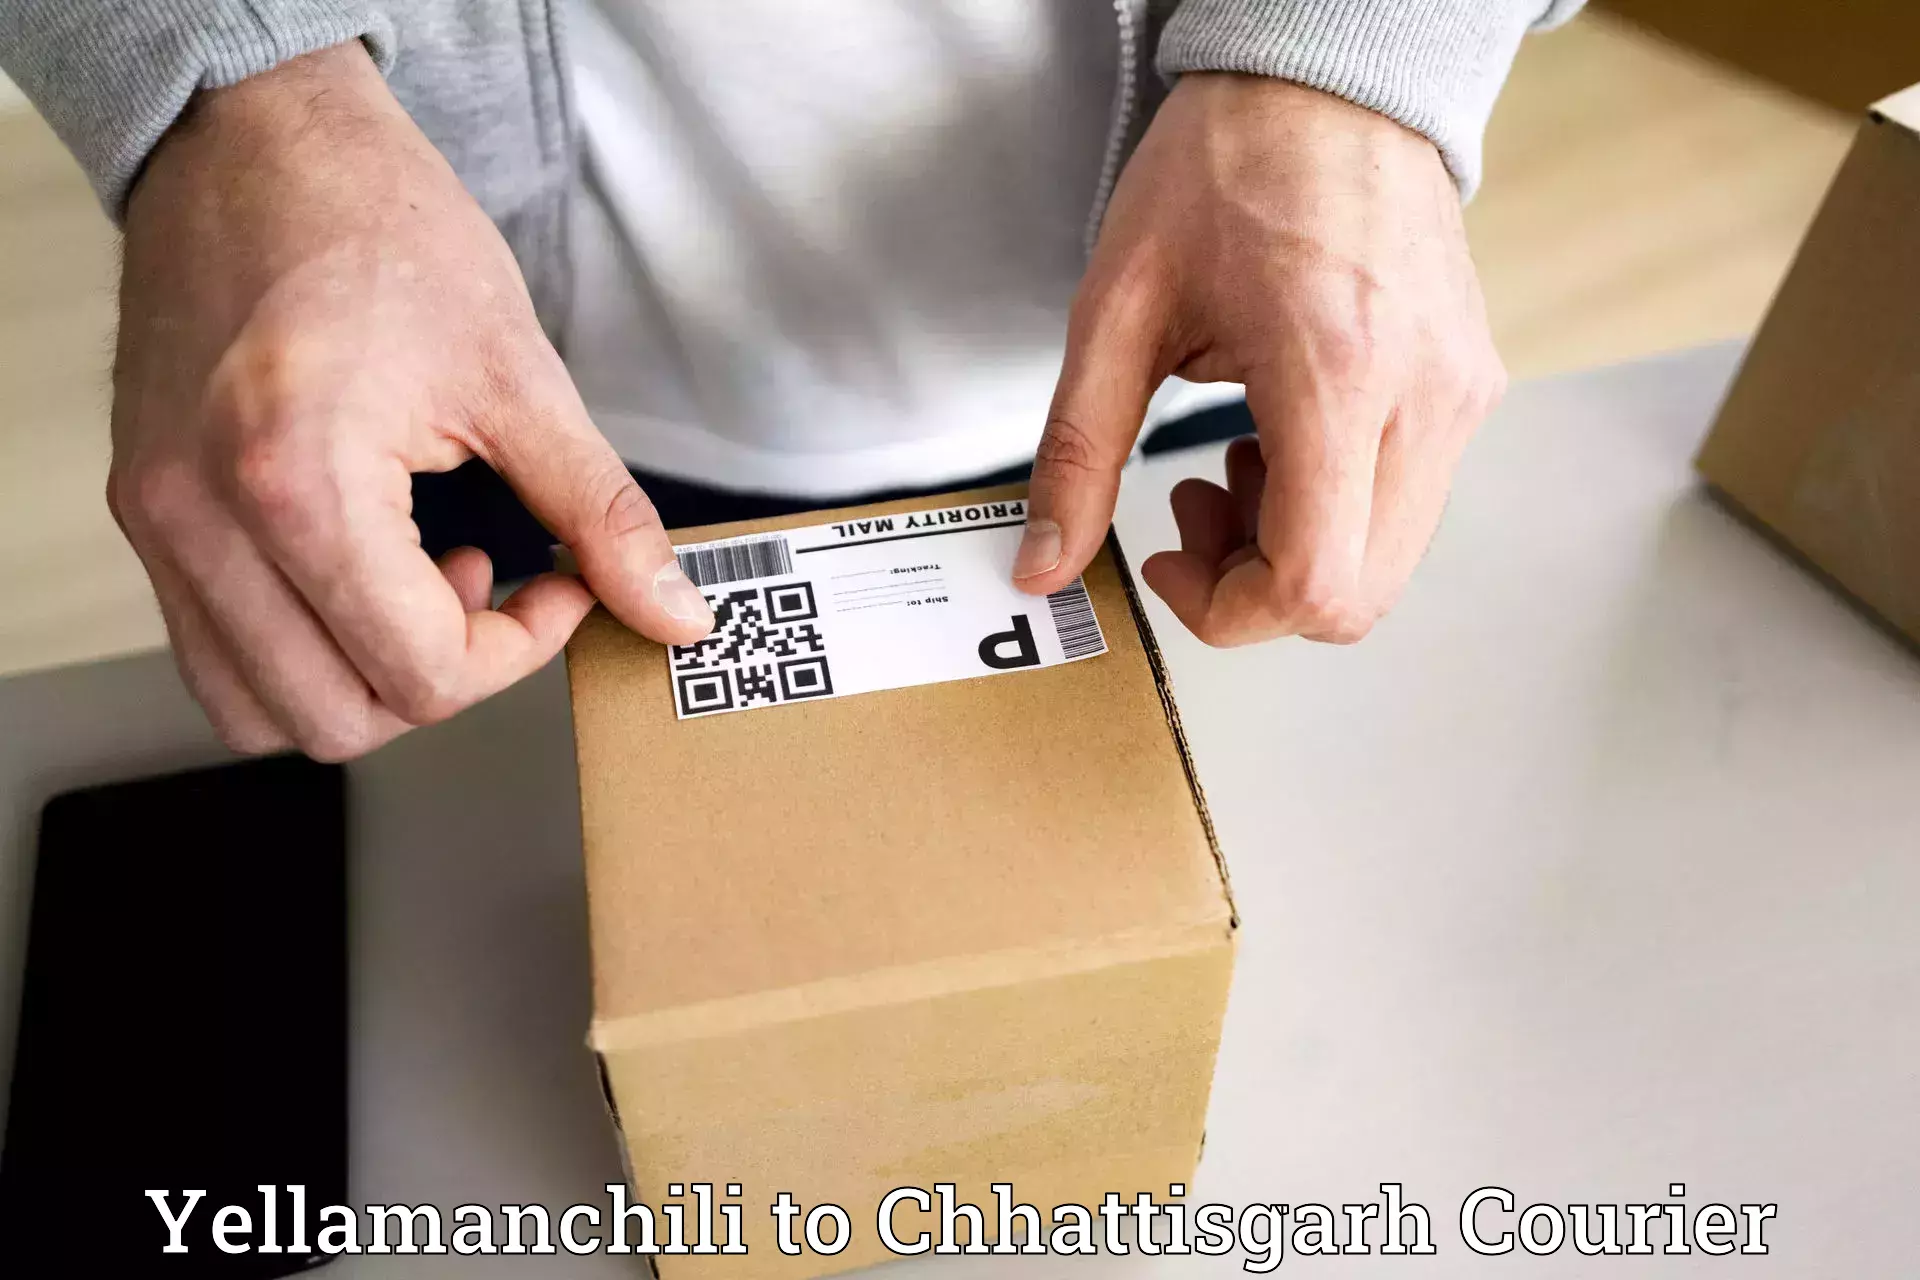 Express logistics providers Yellamanchili to Chhattisgarh